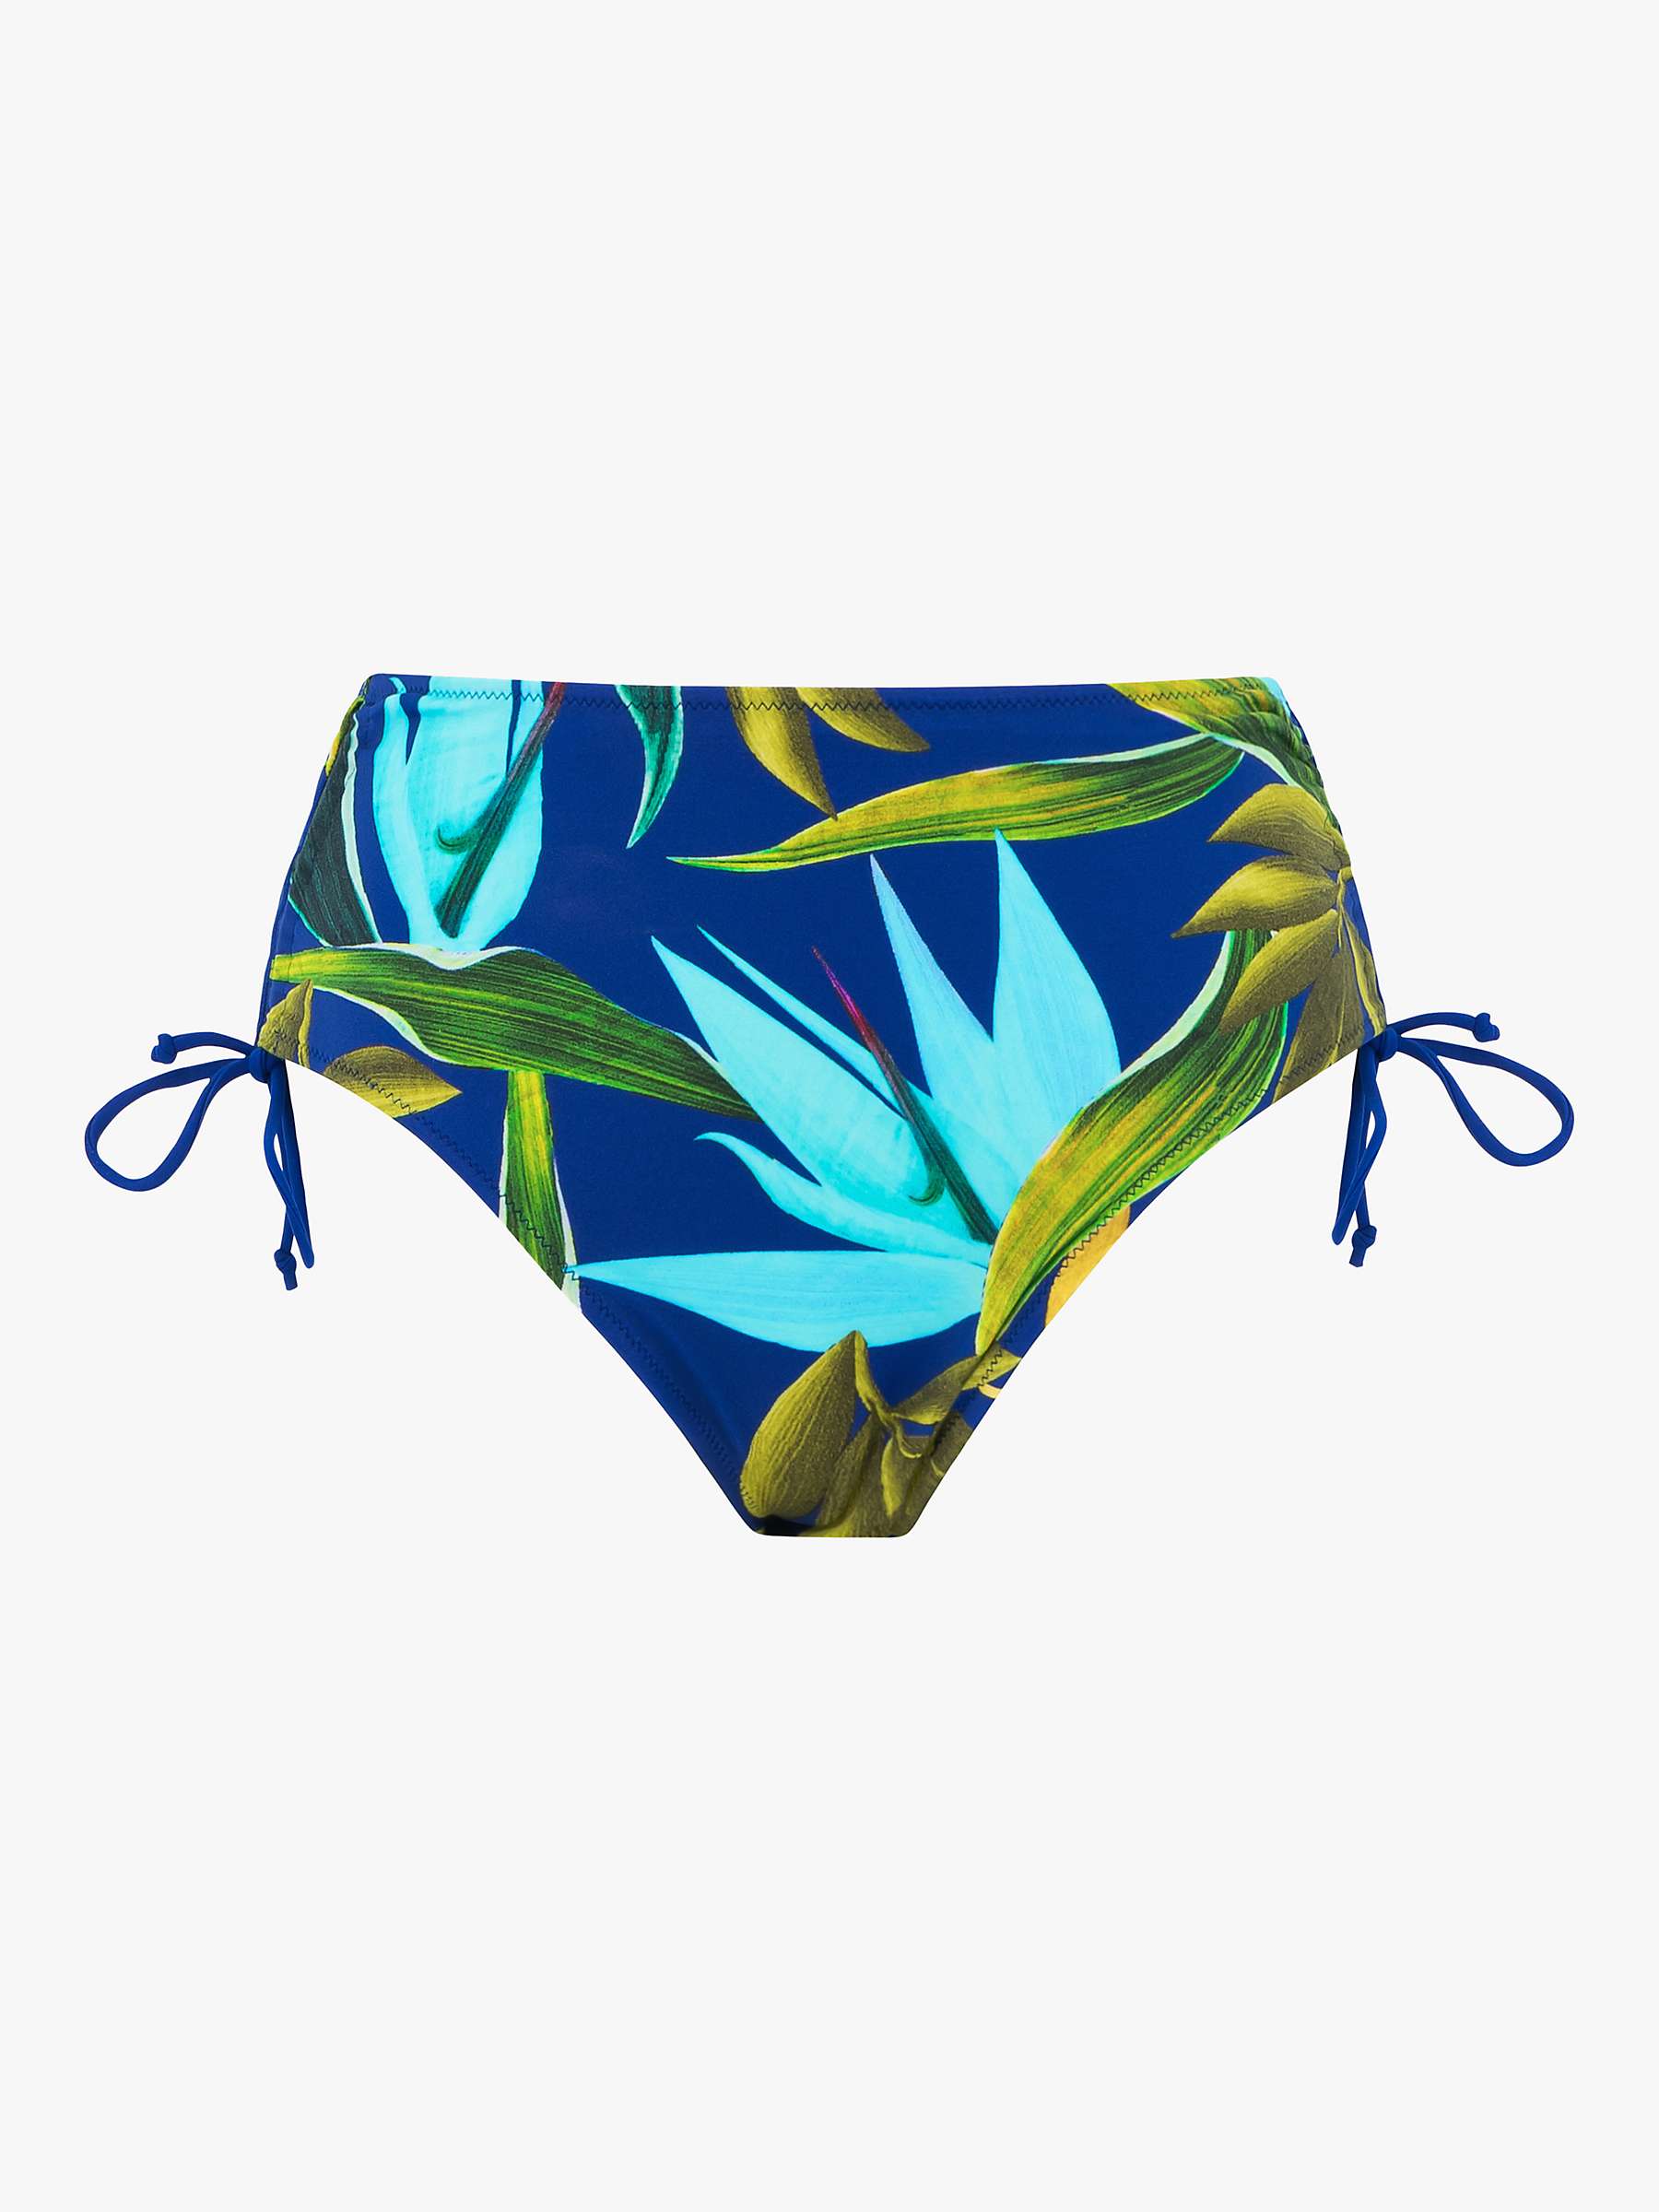 Buy Fantasie Pichola Tropical Print High Waist Bikini Bottoms, Tropical Blue Online at johnlewis.com